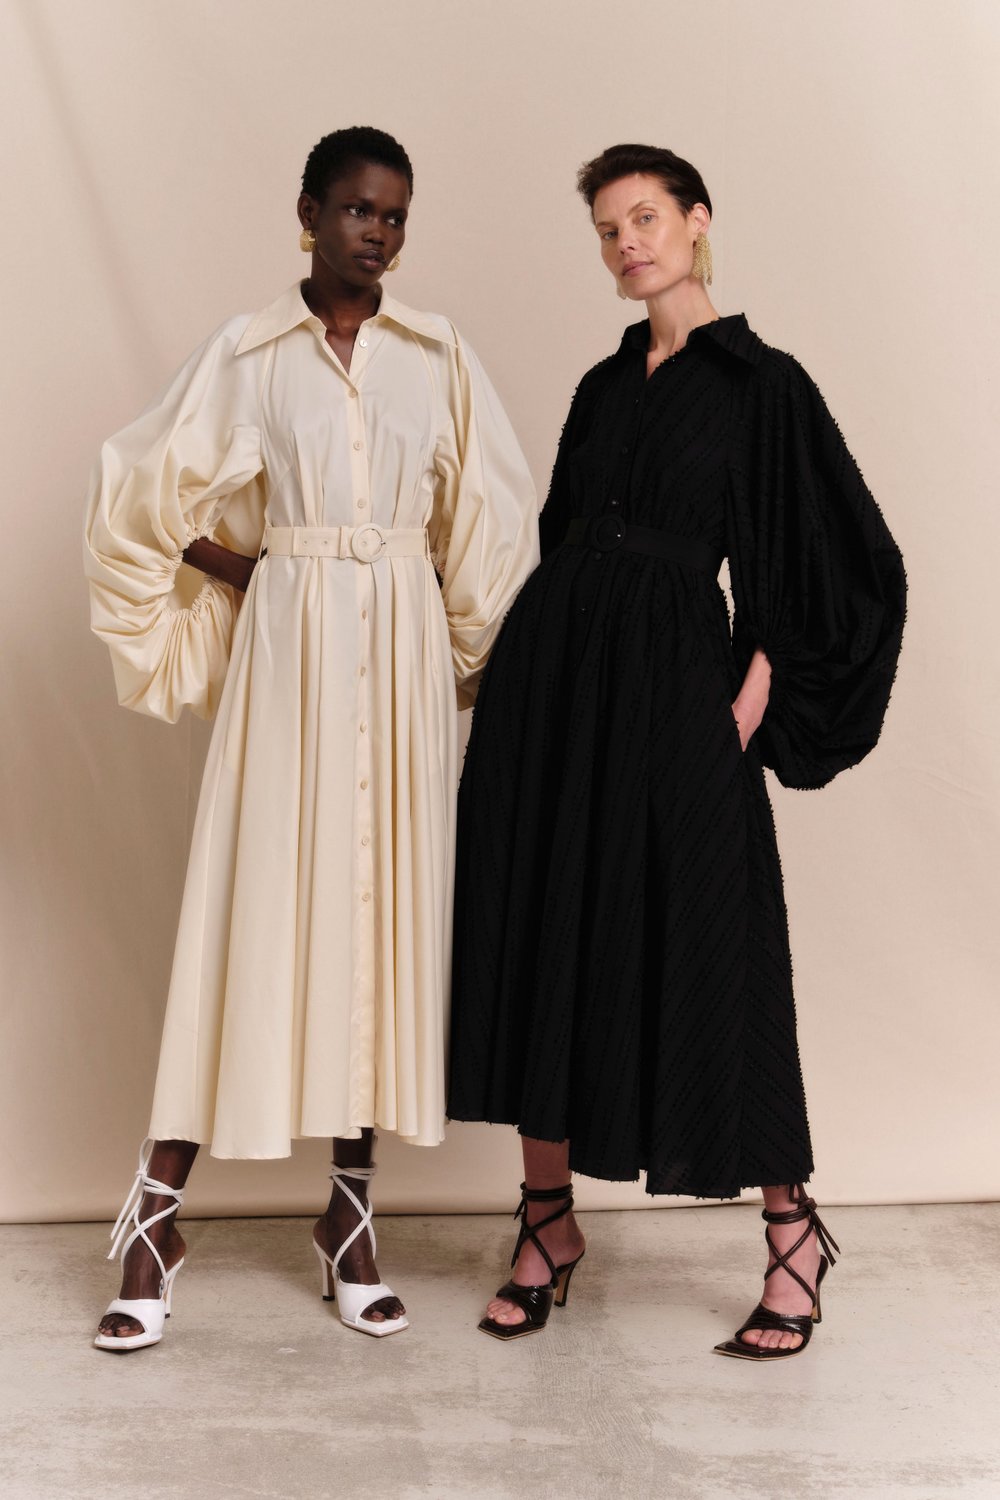 Two models at London Fashion week